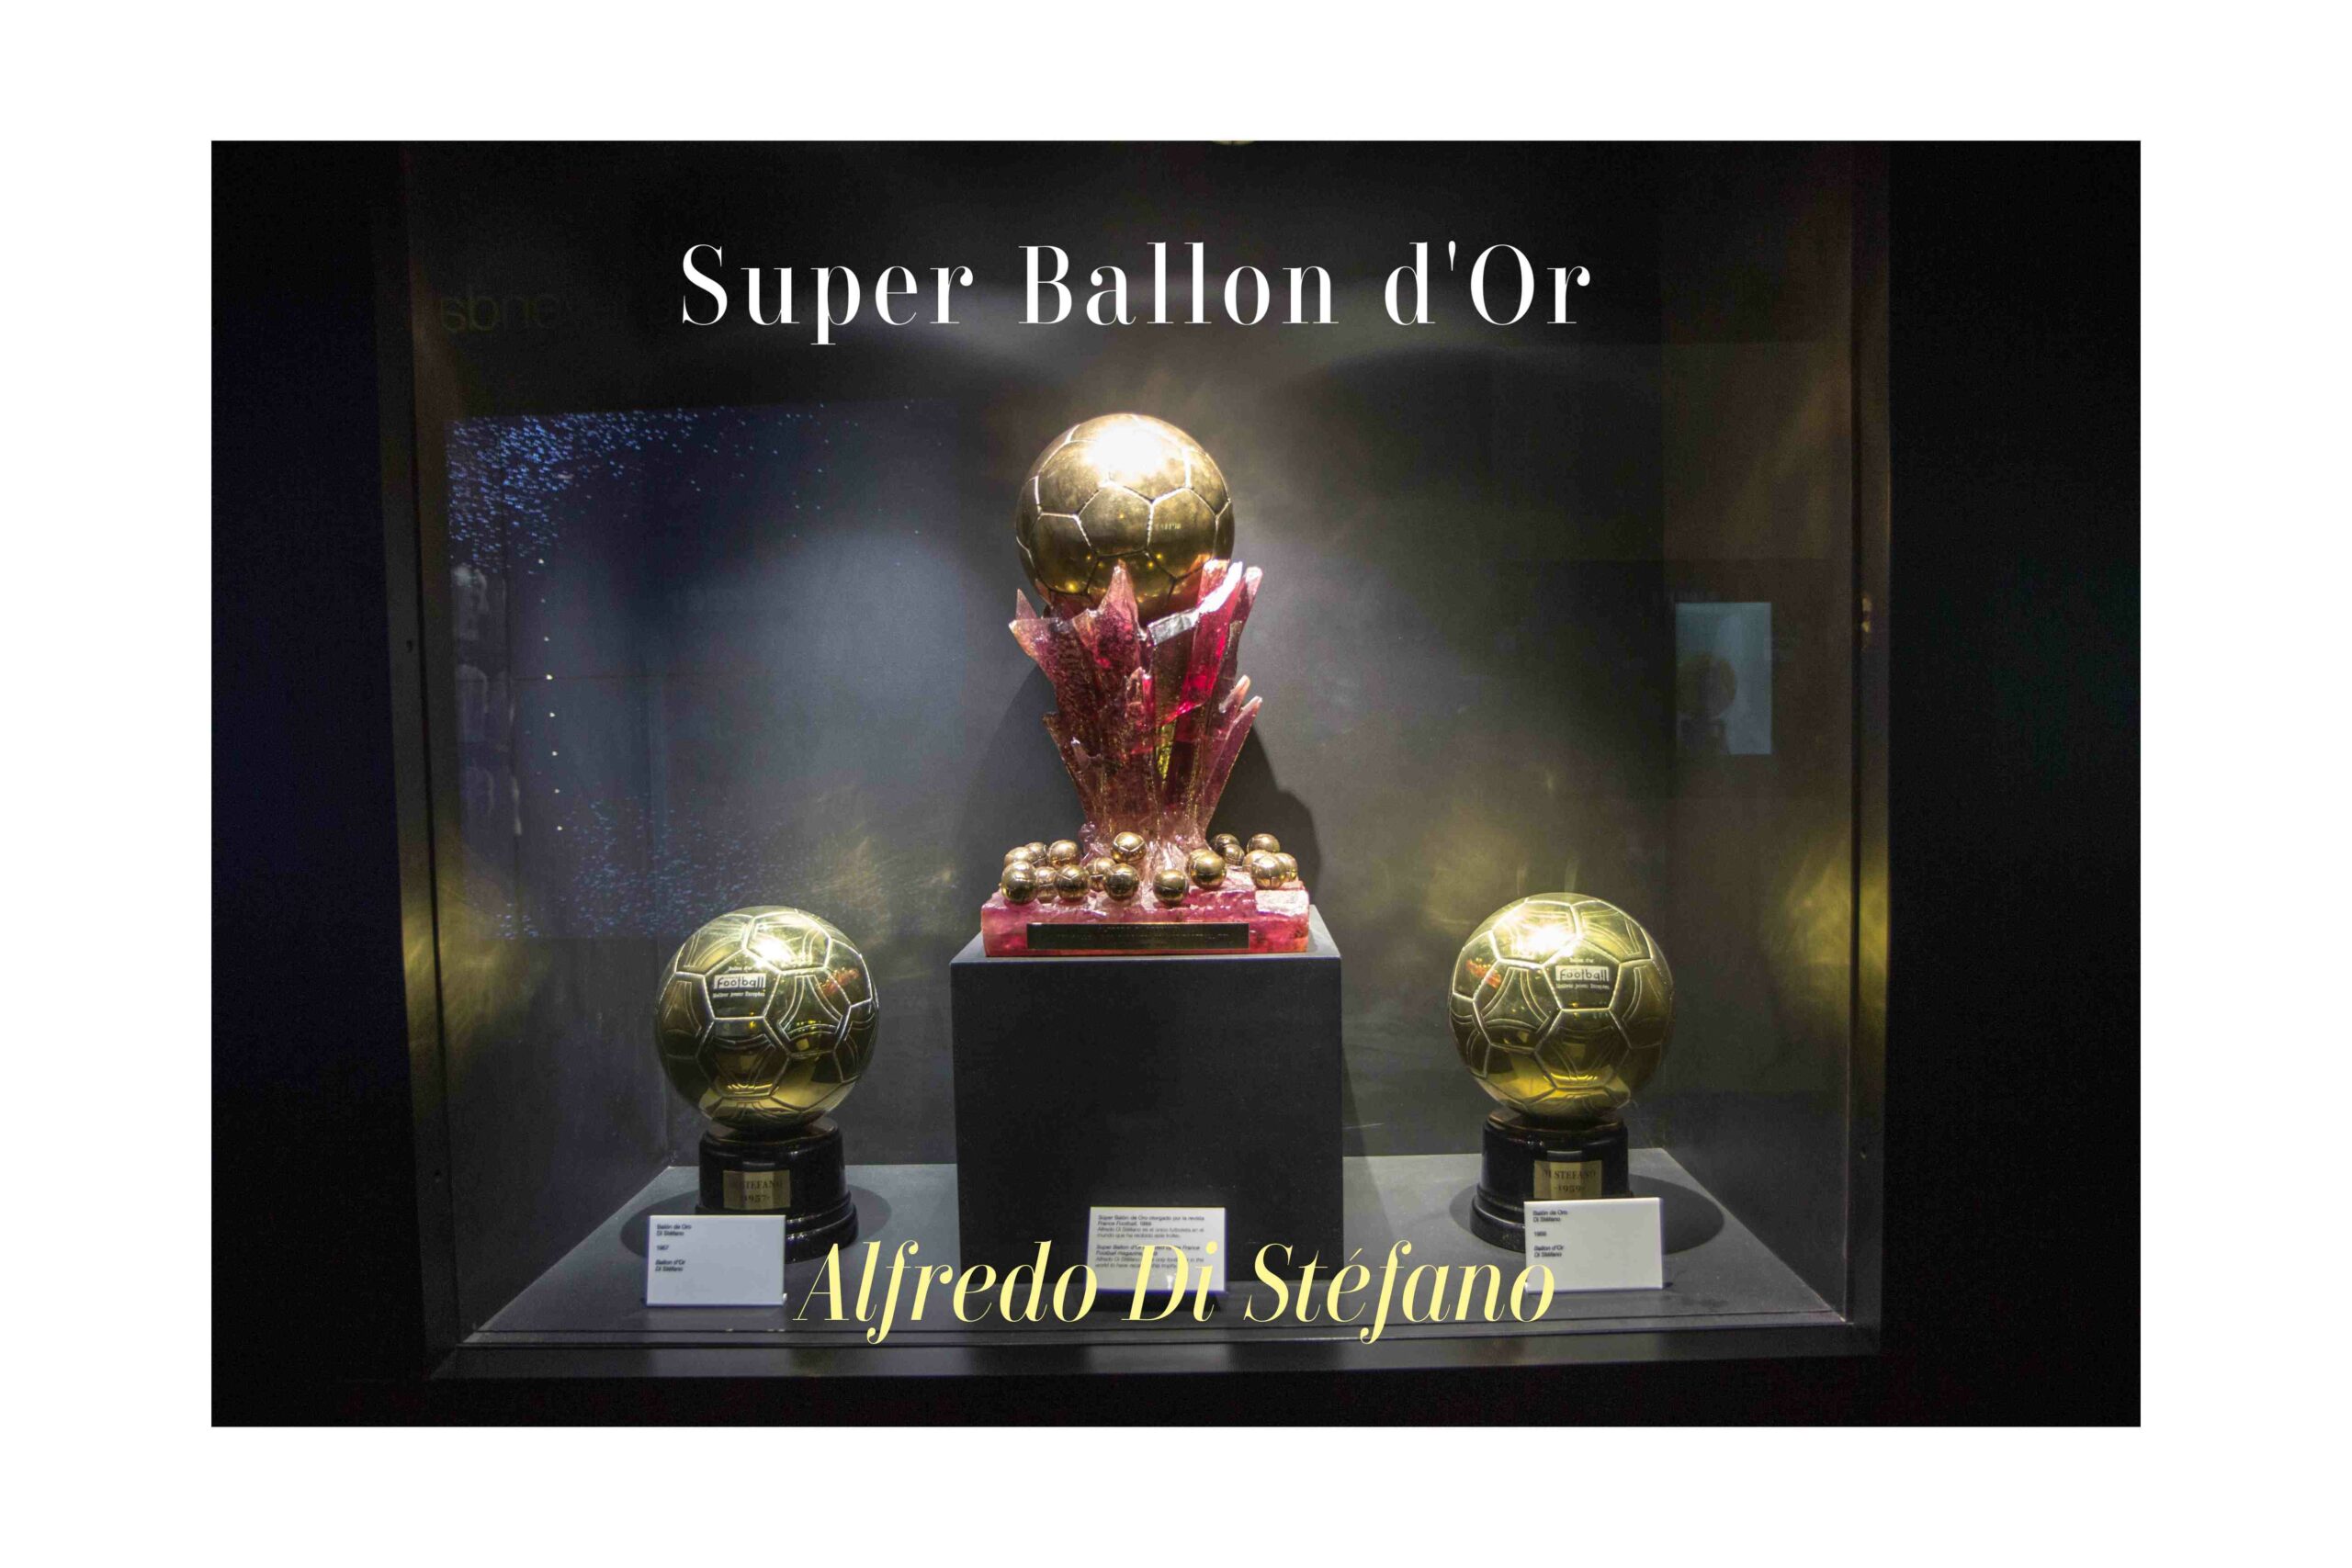 The Super Ballon d'Or won by Alfredo Di Stéfano on 24 December 1989